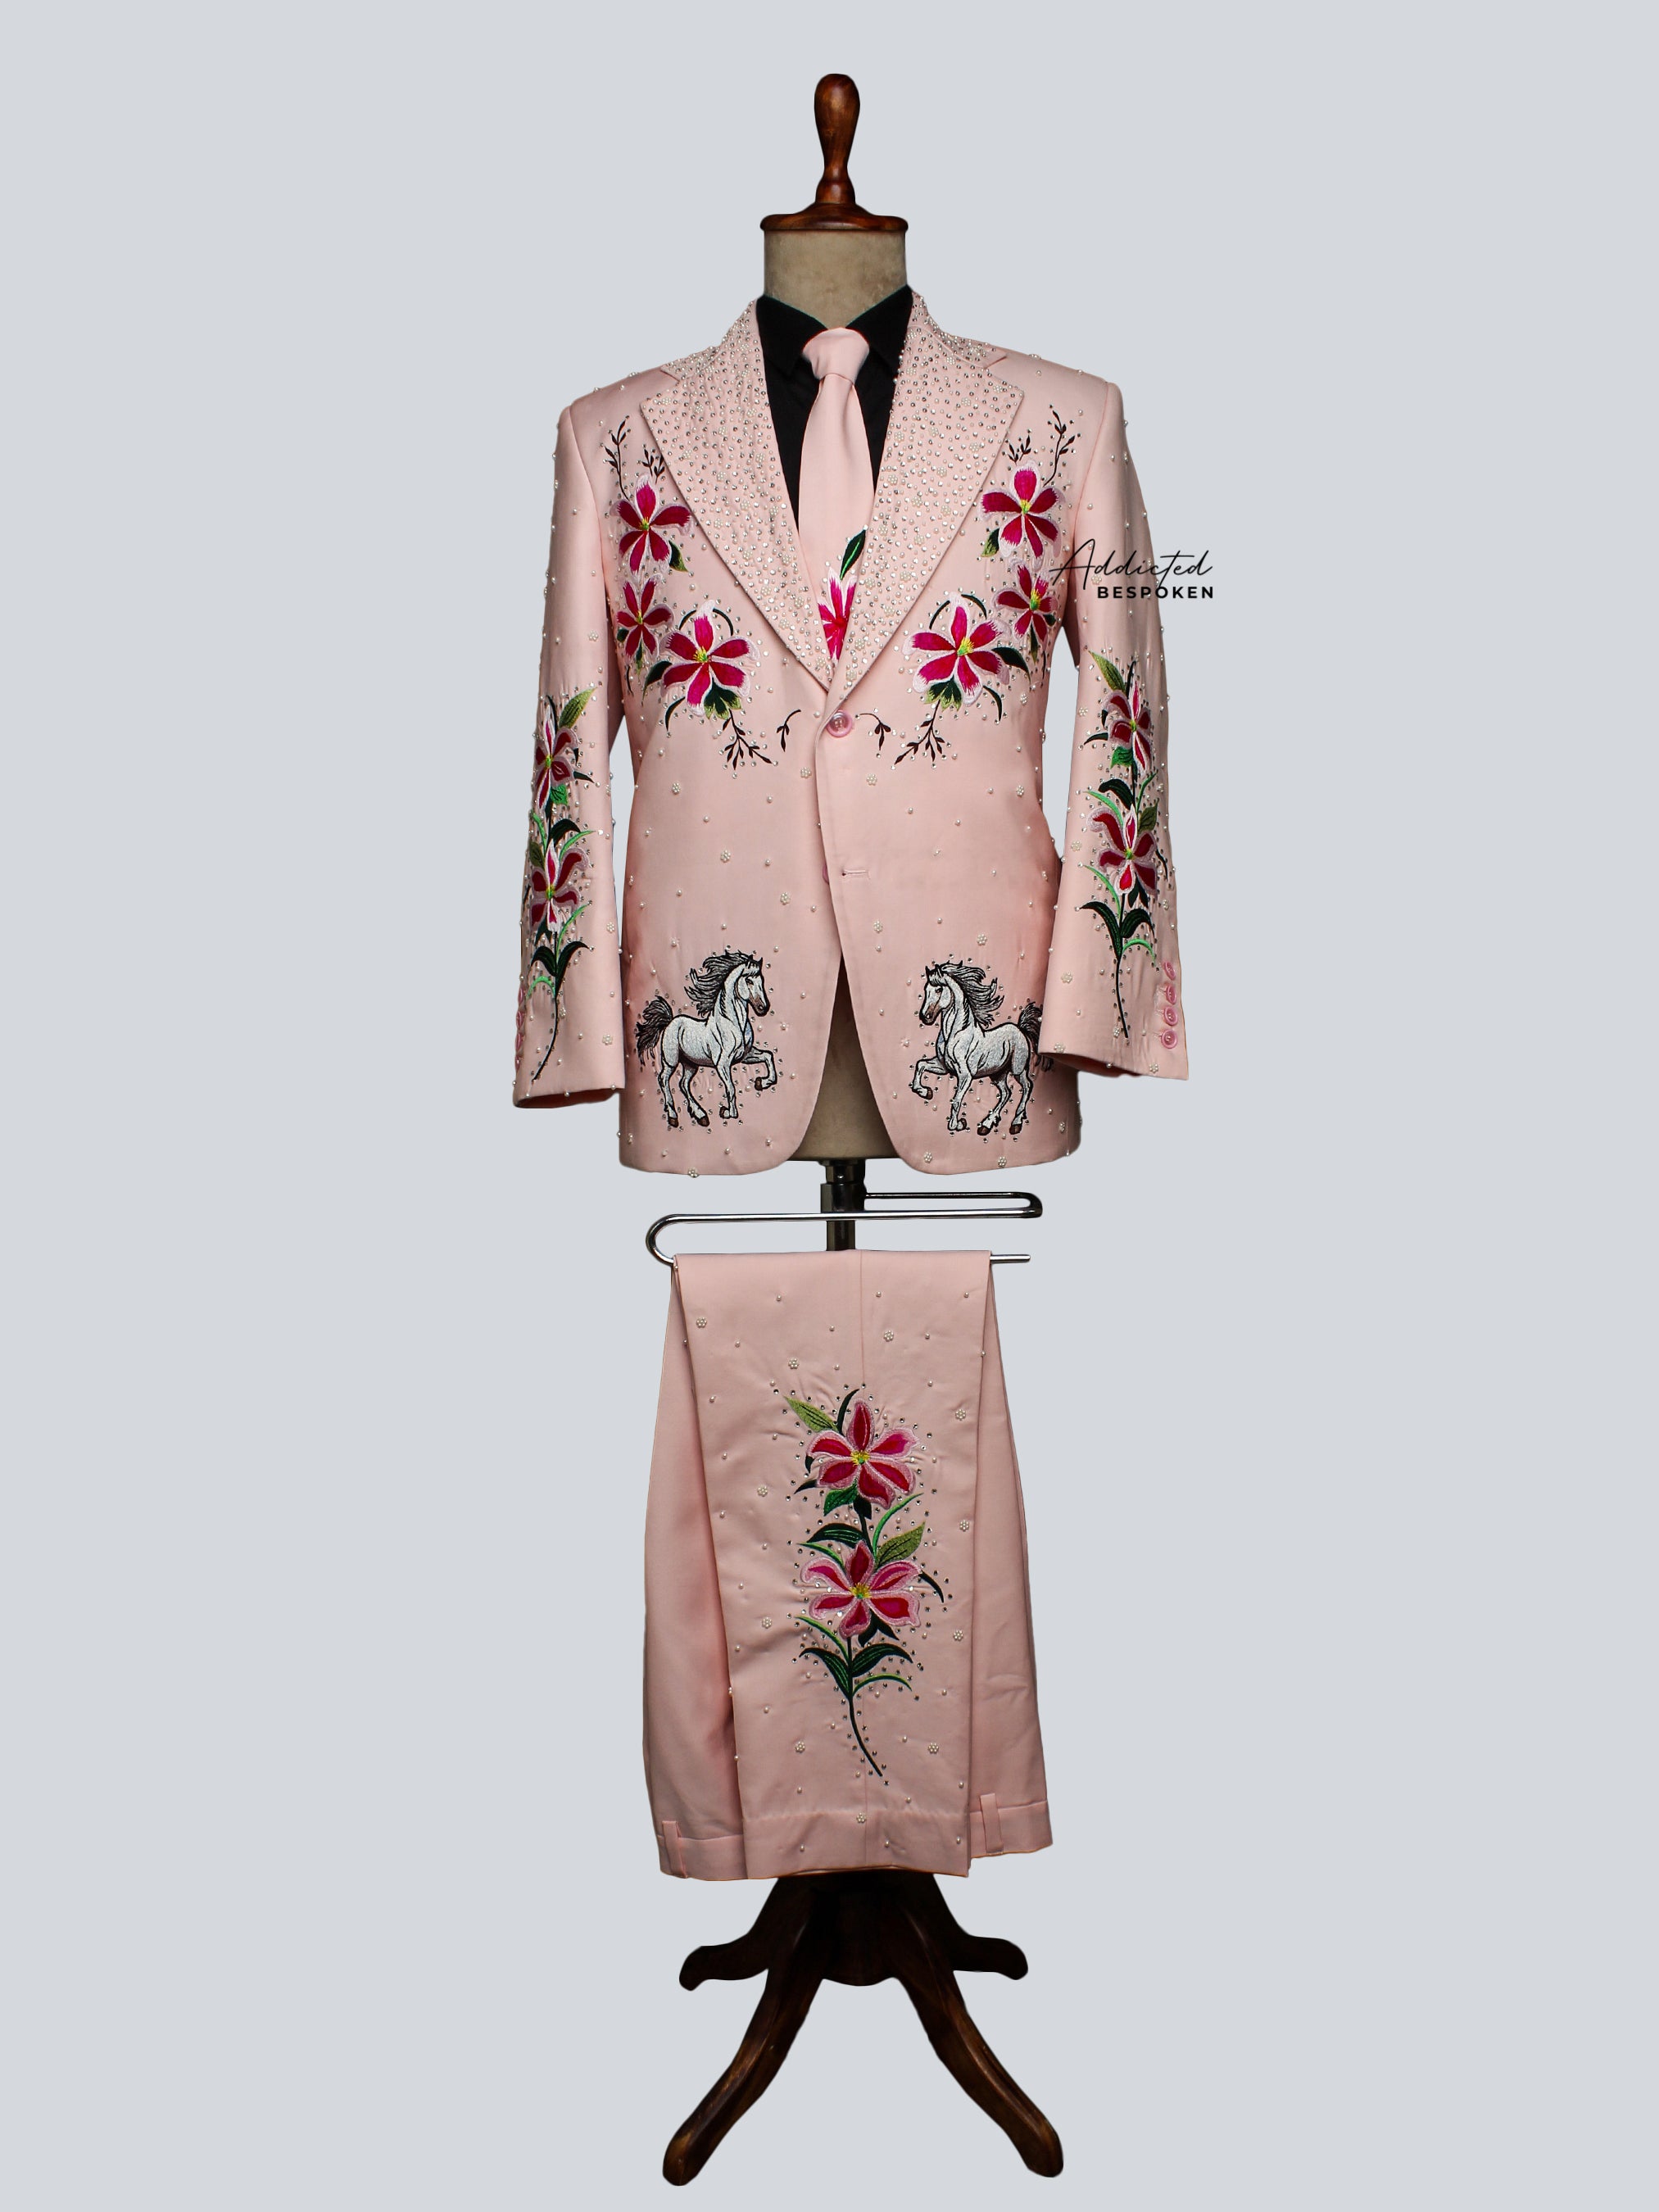 Flora & Fauna Pearl Embellished Suit